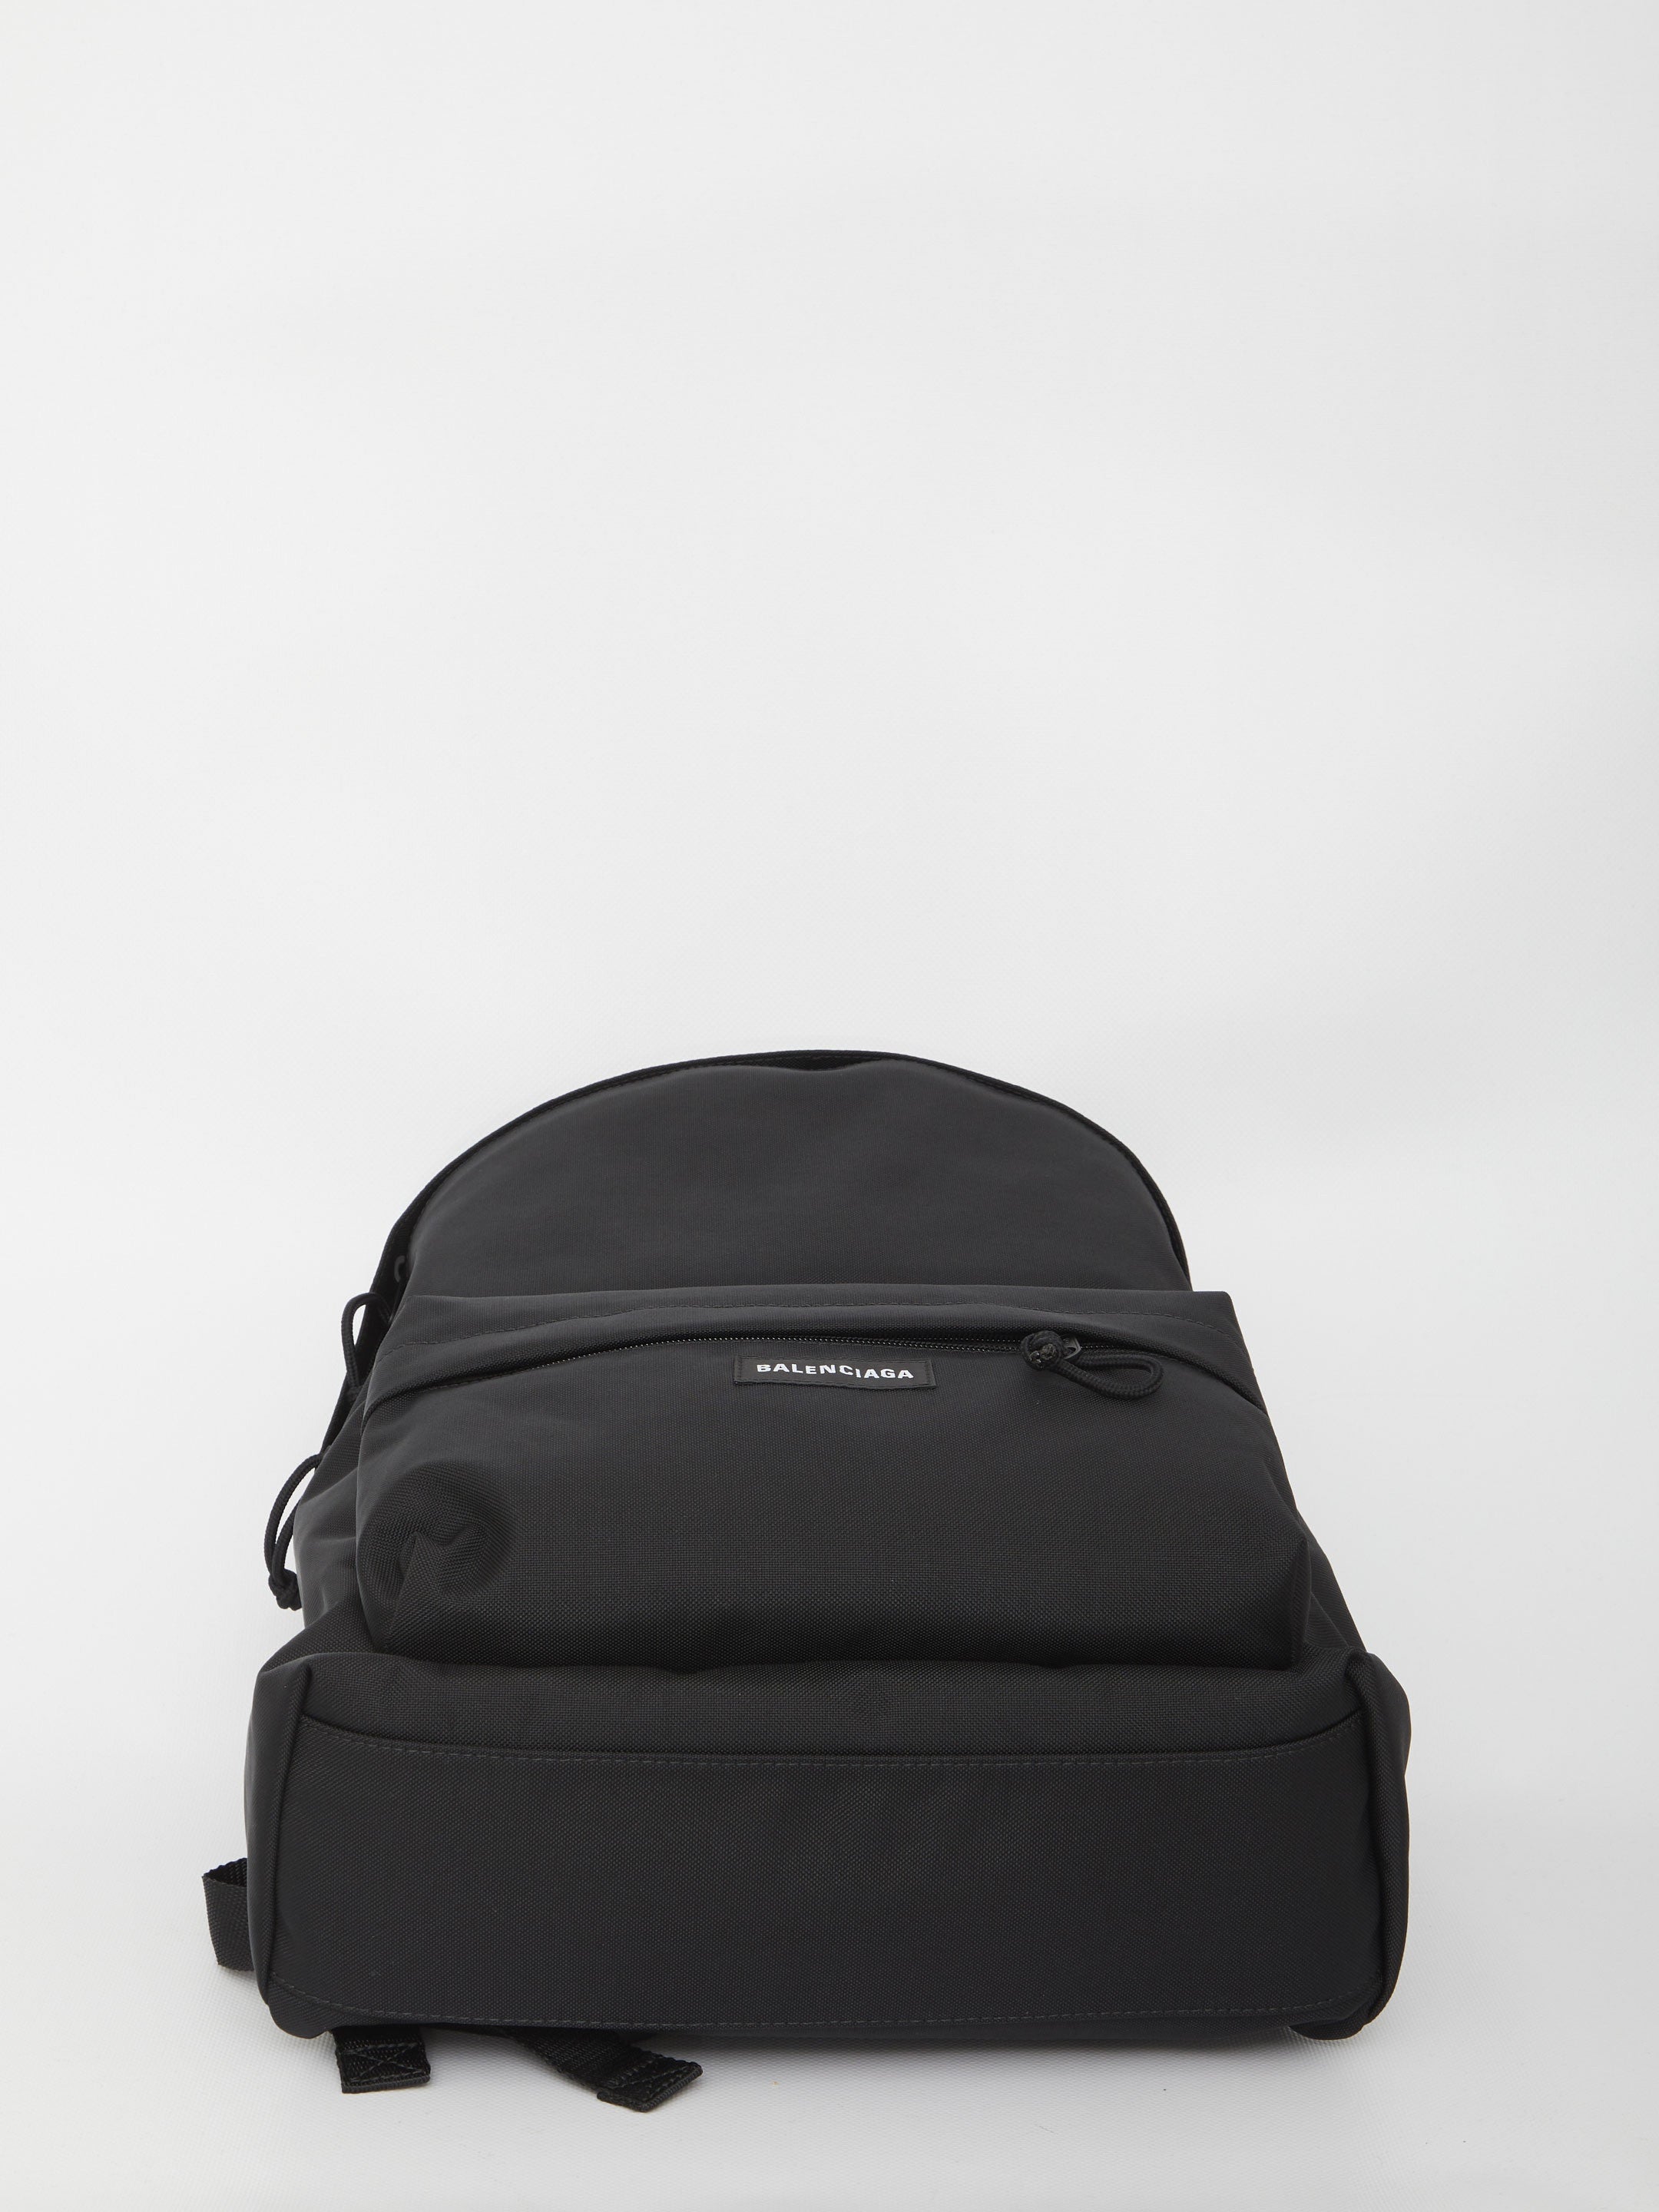 BALENCIAGA-OUTLET-SALE-Explorer-backpack-Taschen-QT-BLACK-ARCHIVE-COLLECTION-3.jpg